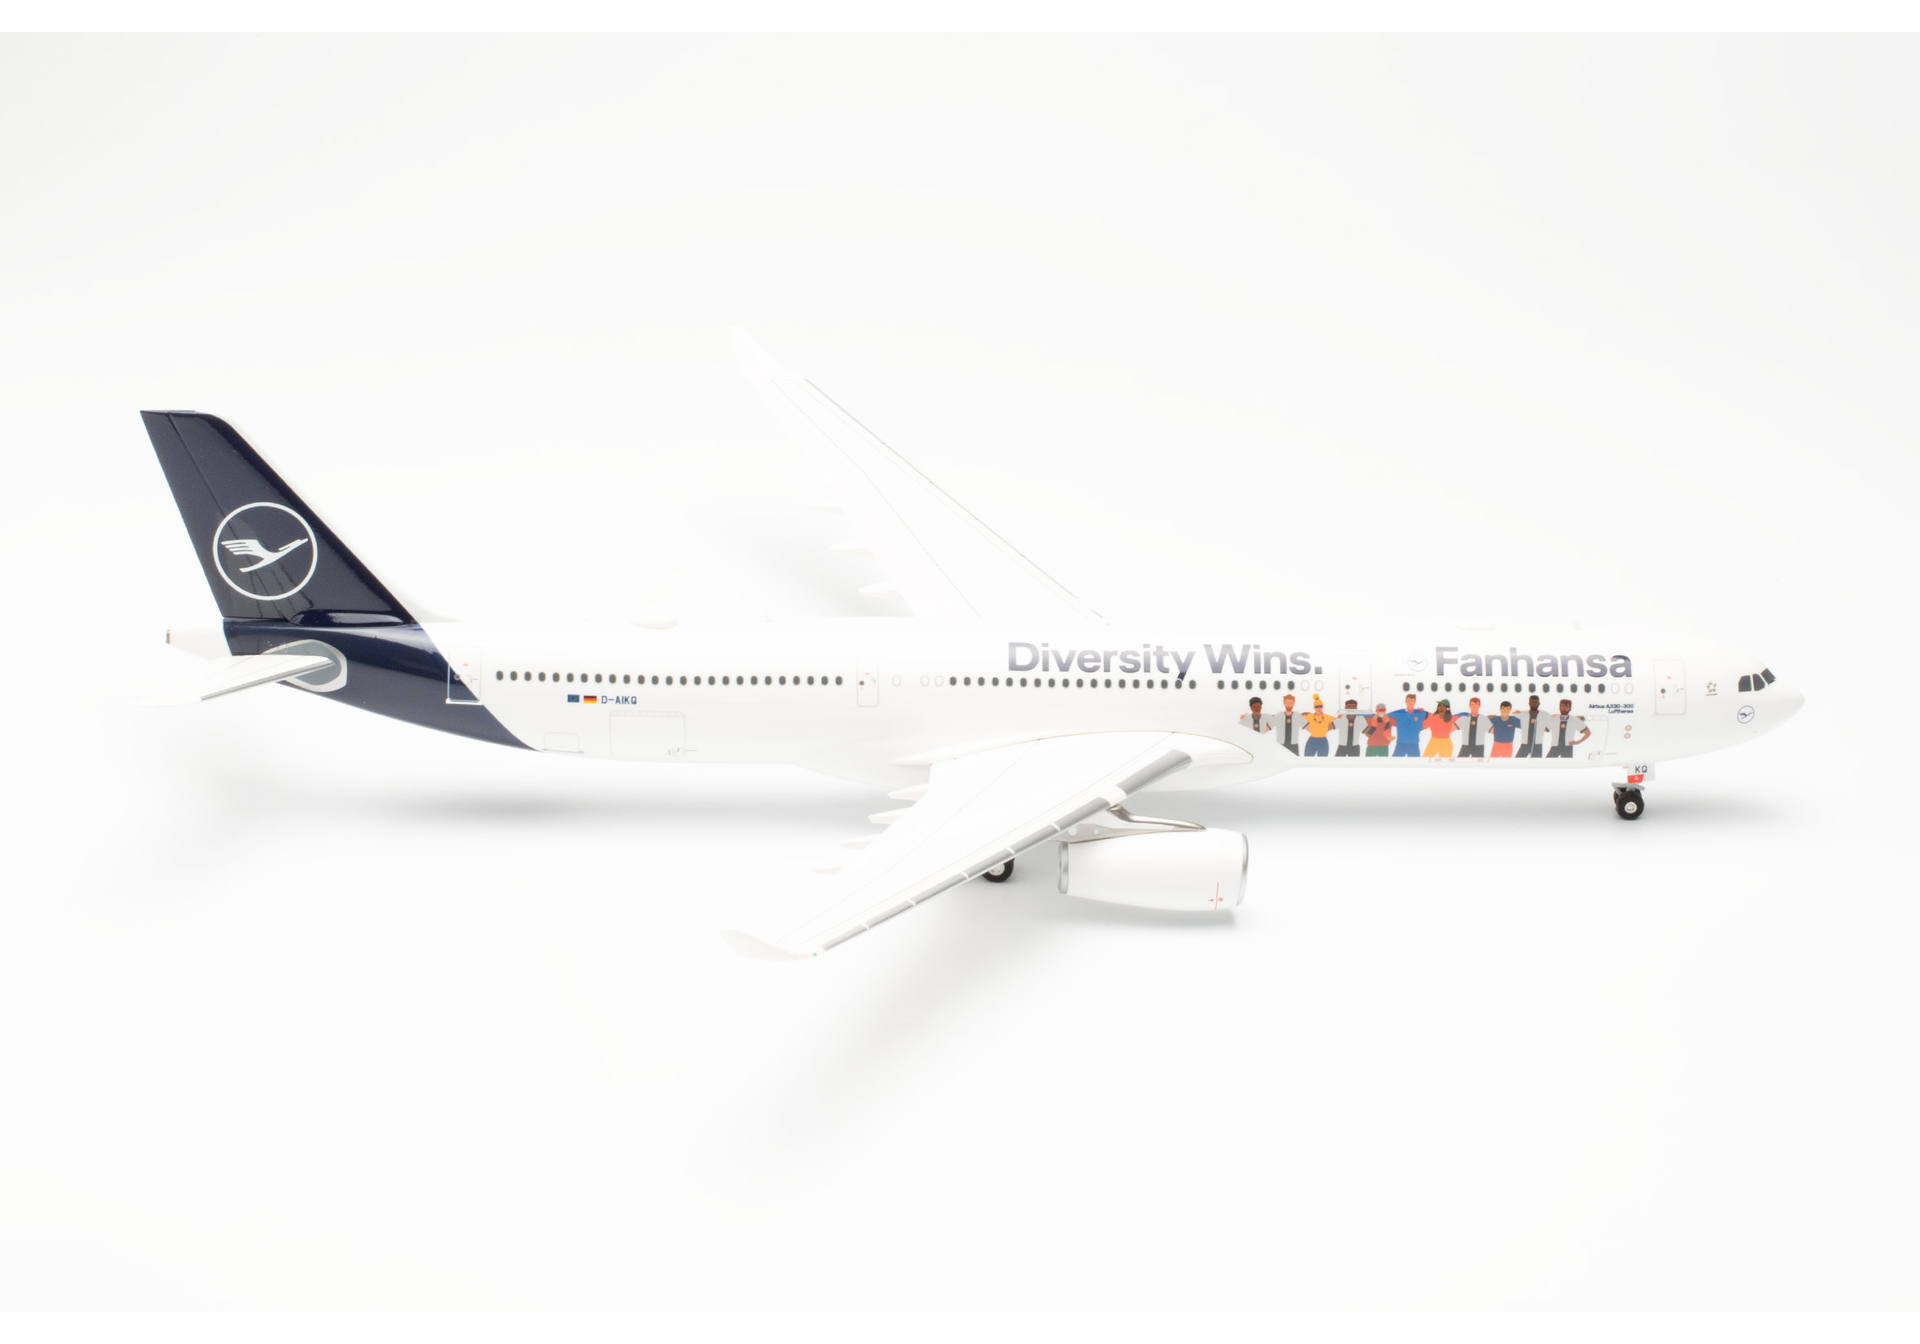 Lufthansa Airbus A330-300 "Fanhansa - Diversity Wins" - D-AIKQ